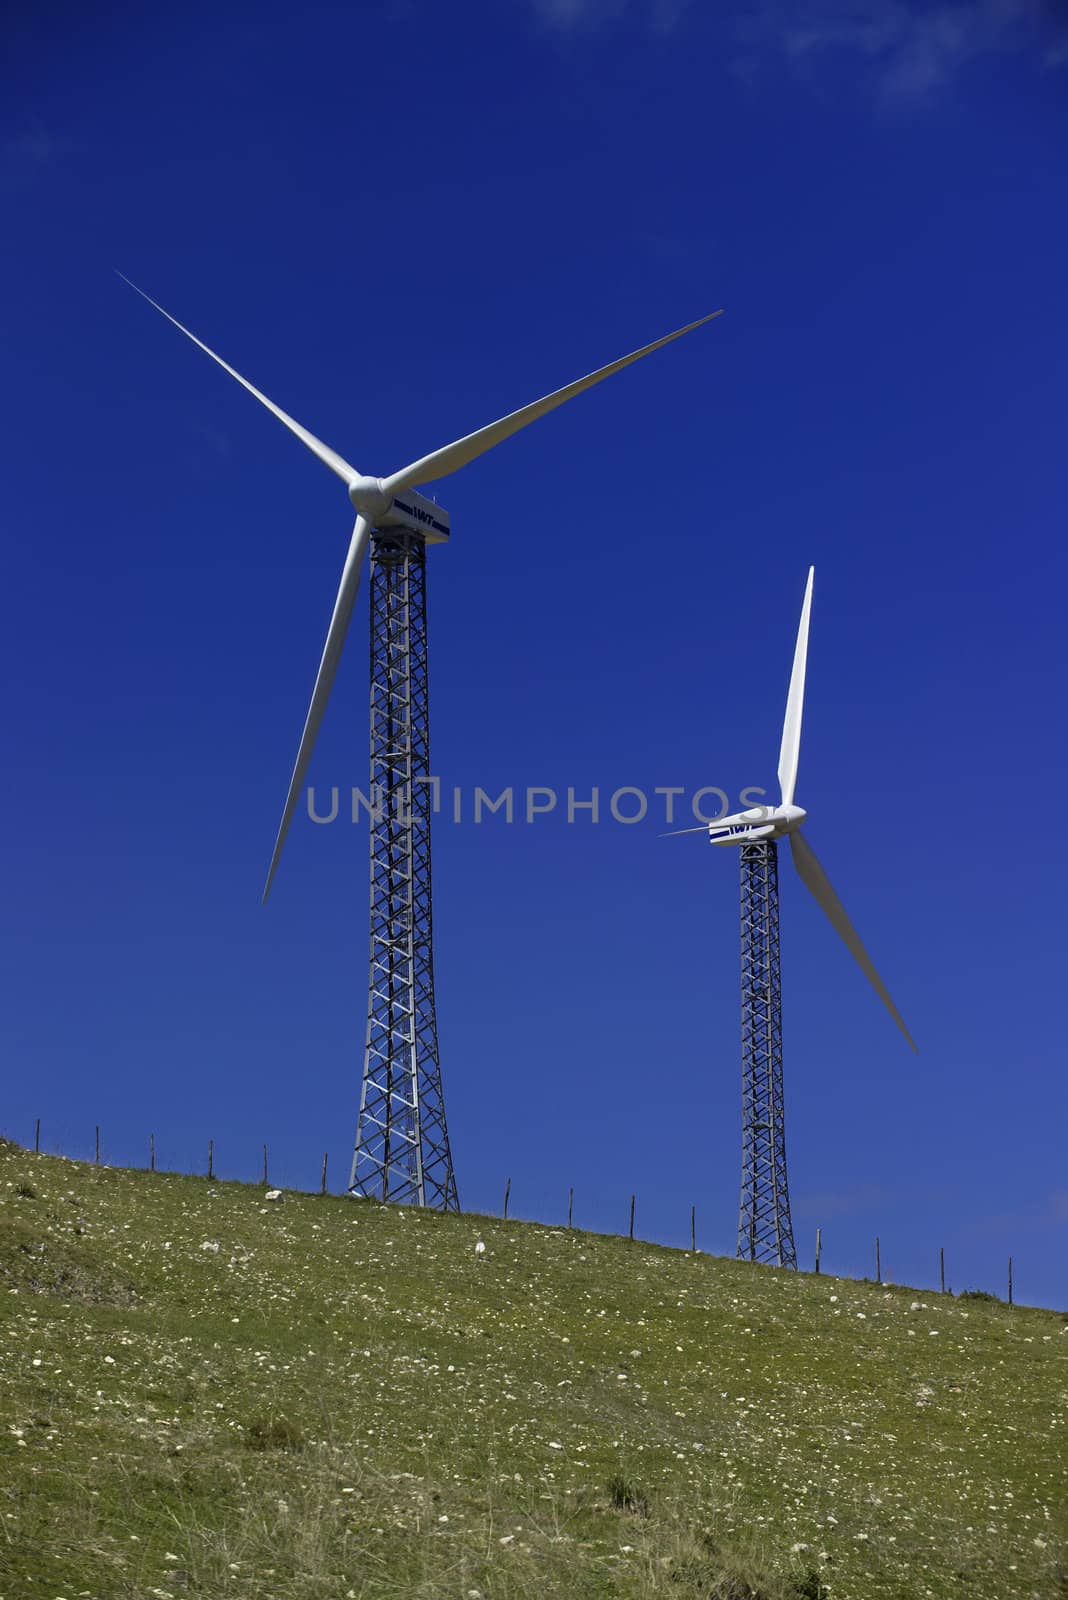 ITALY, Sicily, Francofonte/Catania province, countryside, Eolic energy turbines by agiampiccolo